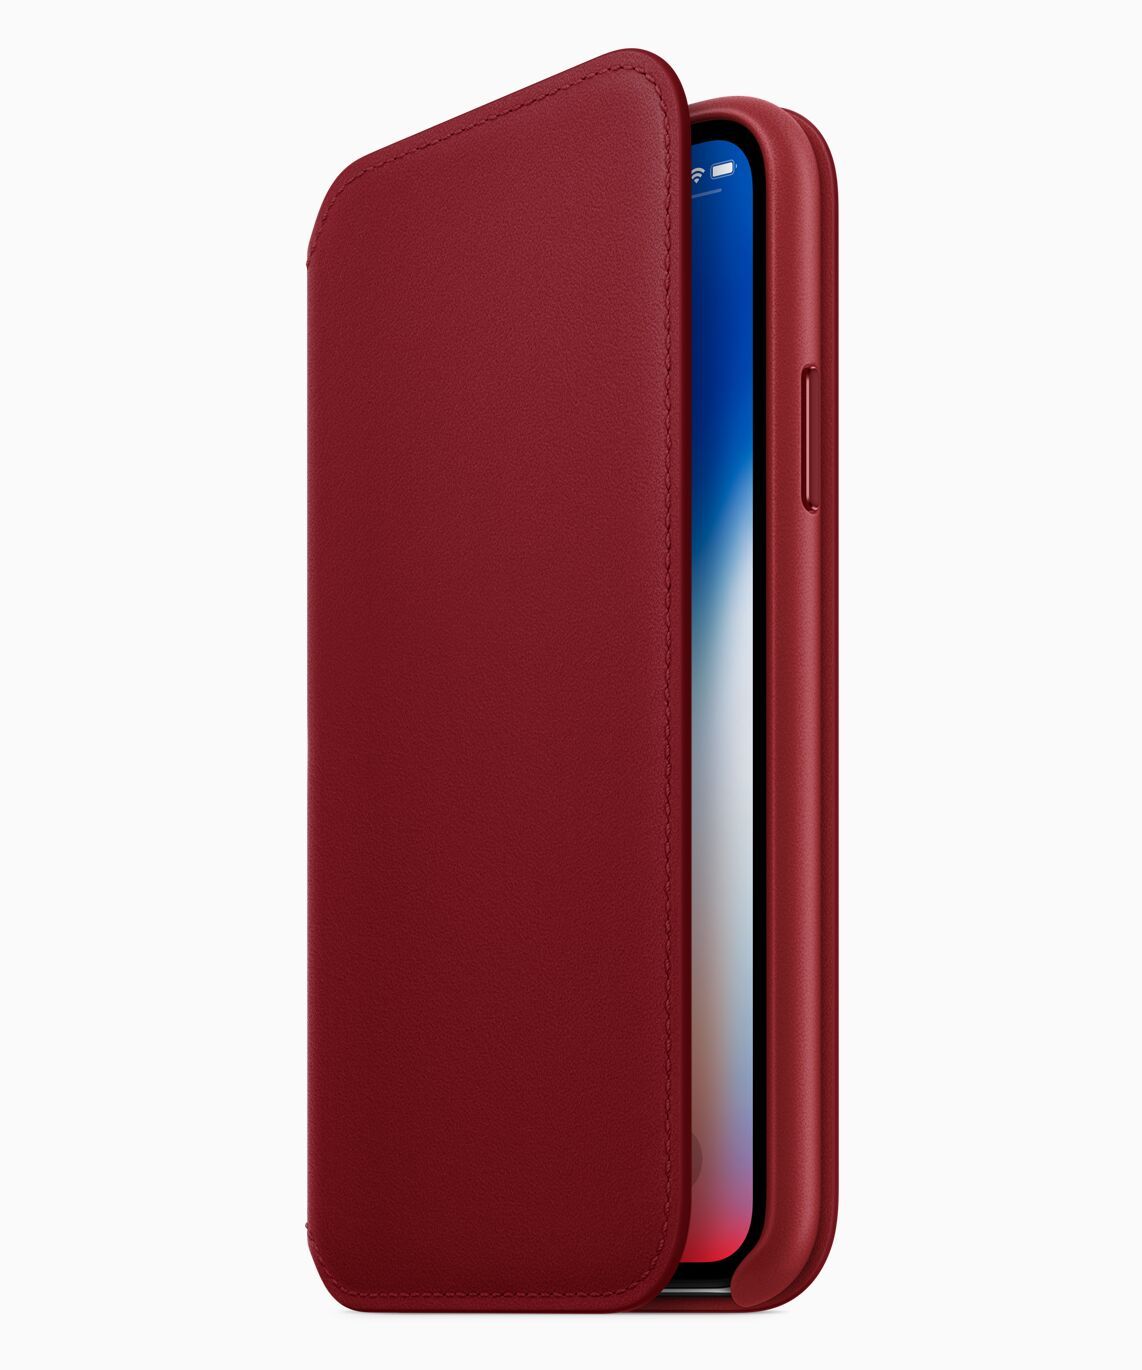 Apple推出iPhone8及iPhone8Plus (PRODUCT)RED特別版